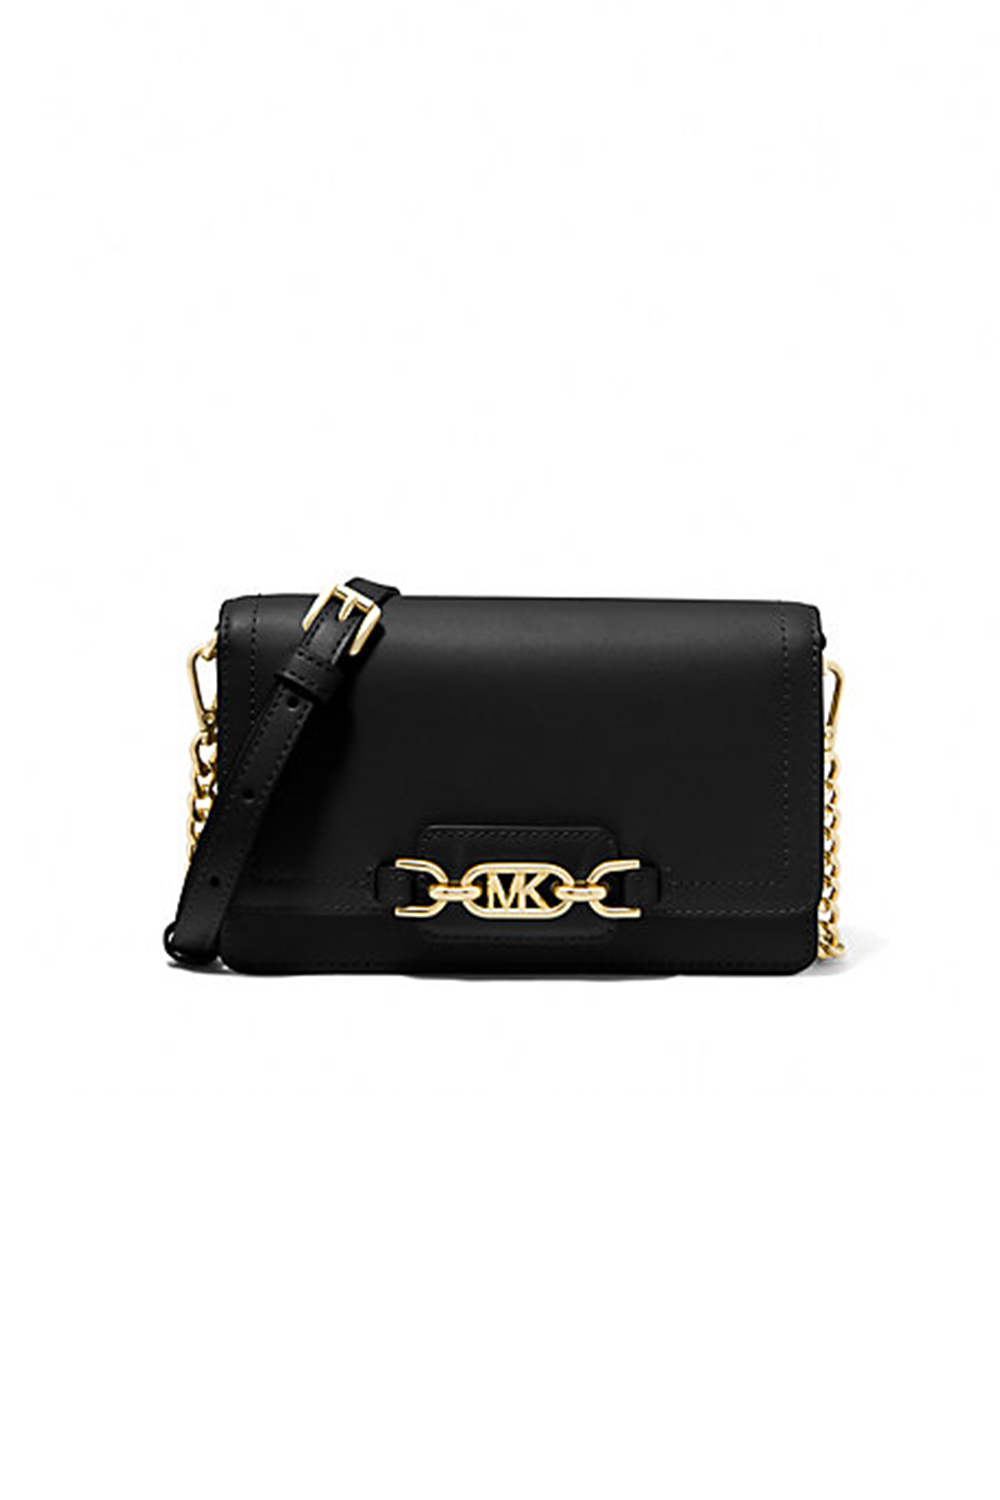 Michael Kors Black womens Crossbody Bags | Odel.lk